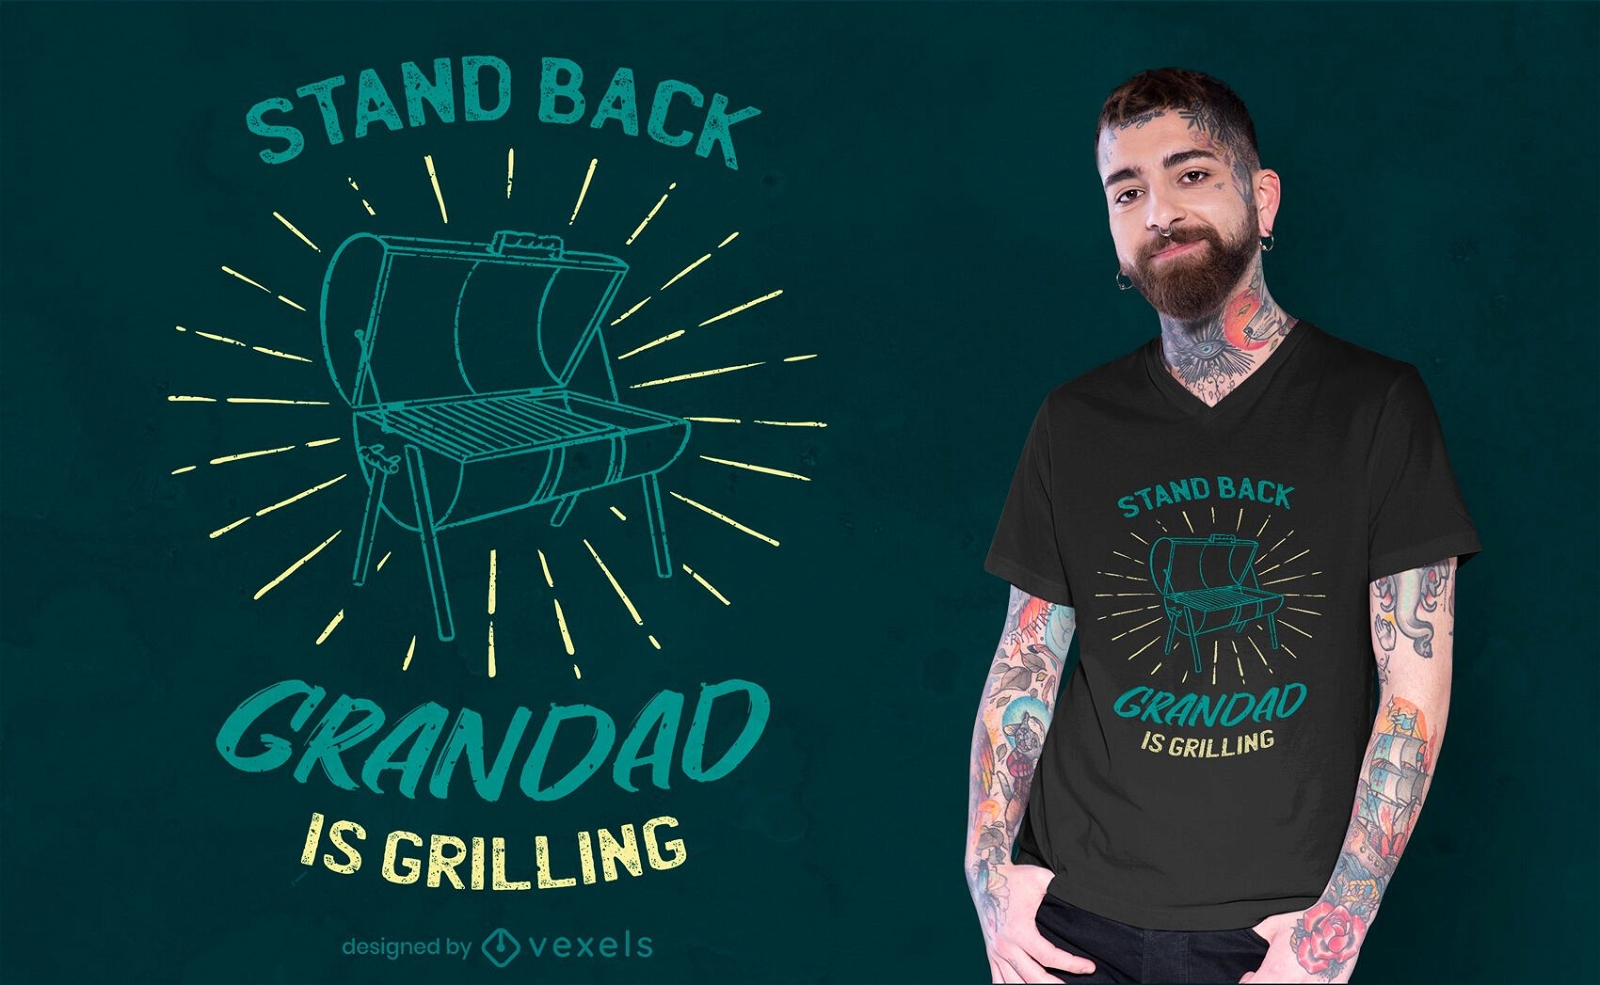 Grandad is grilling t-shirt design